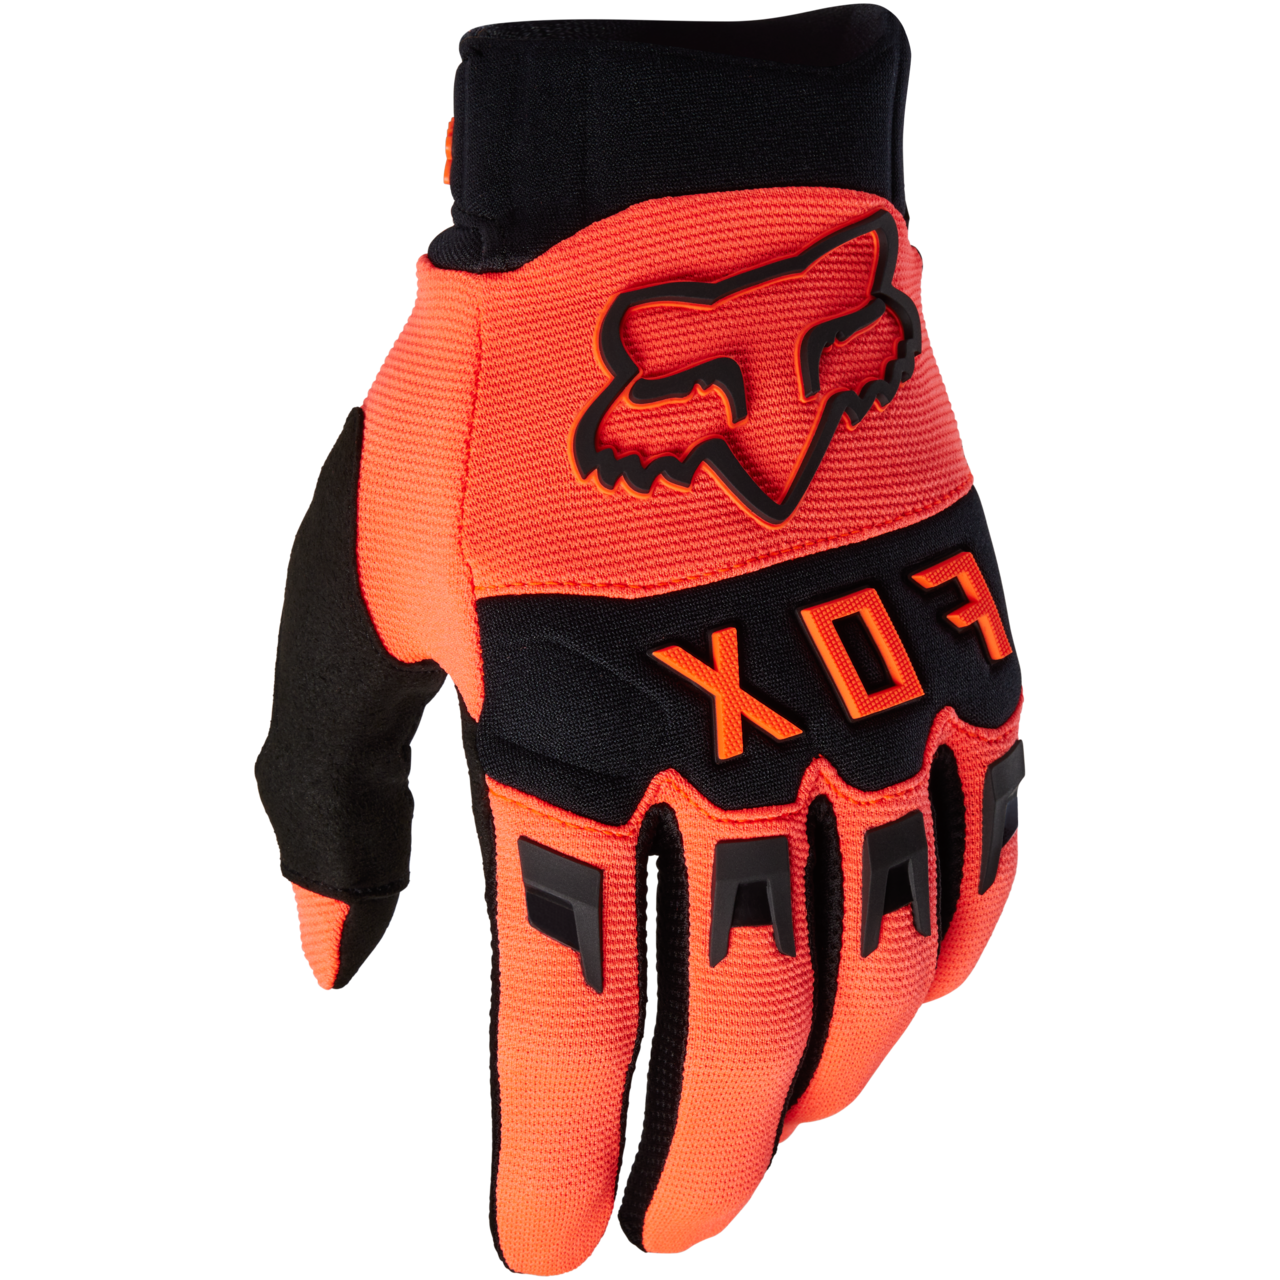 fox racing gloves for men dirtpaw drive